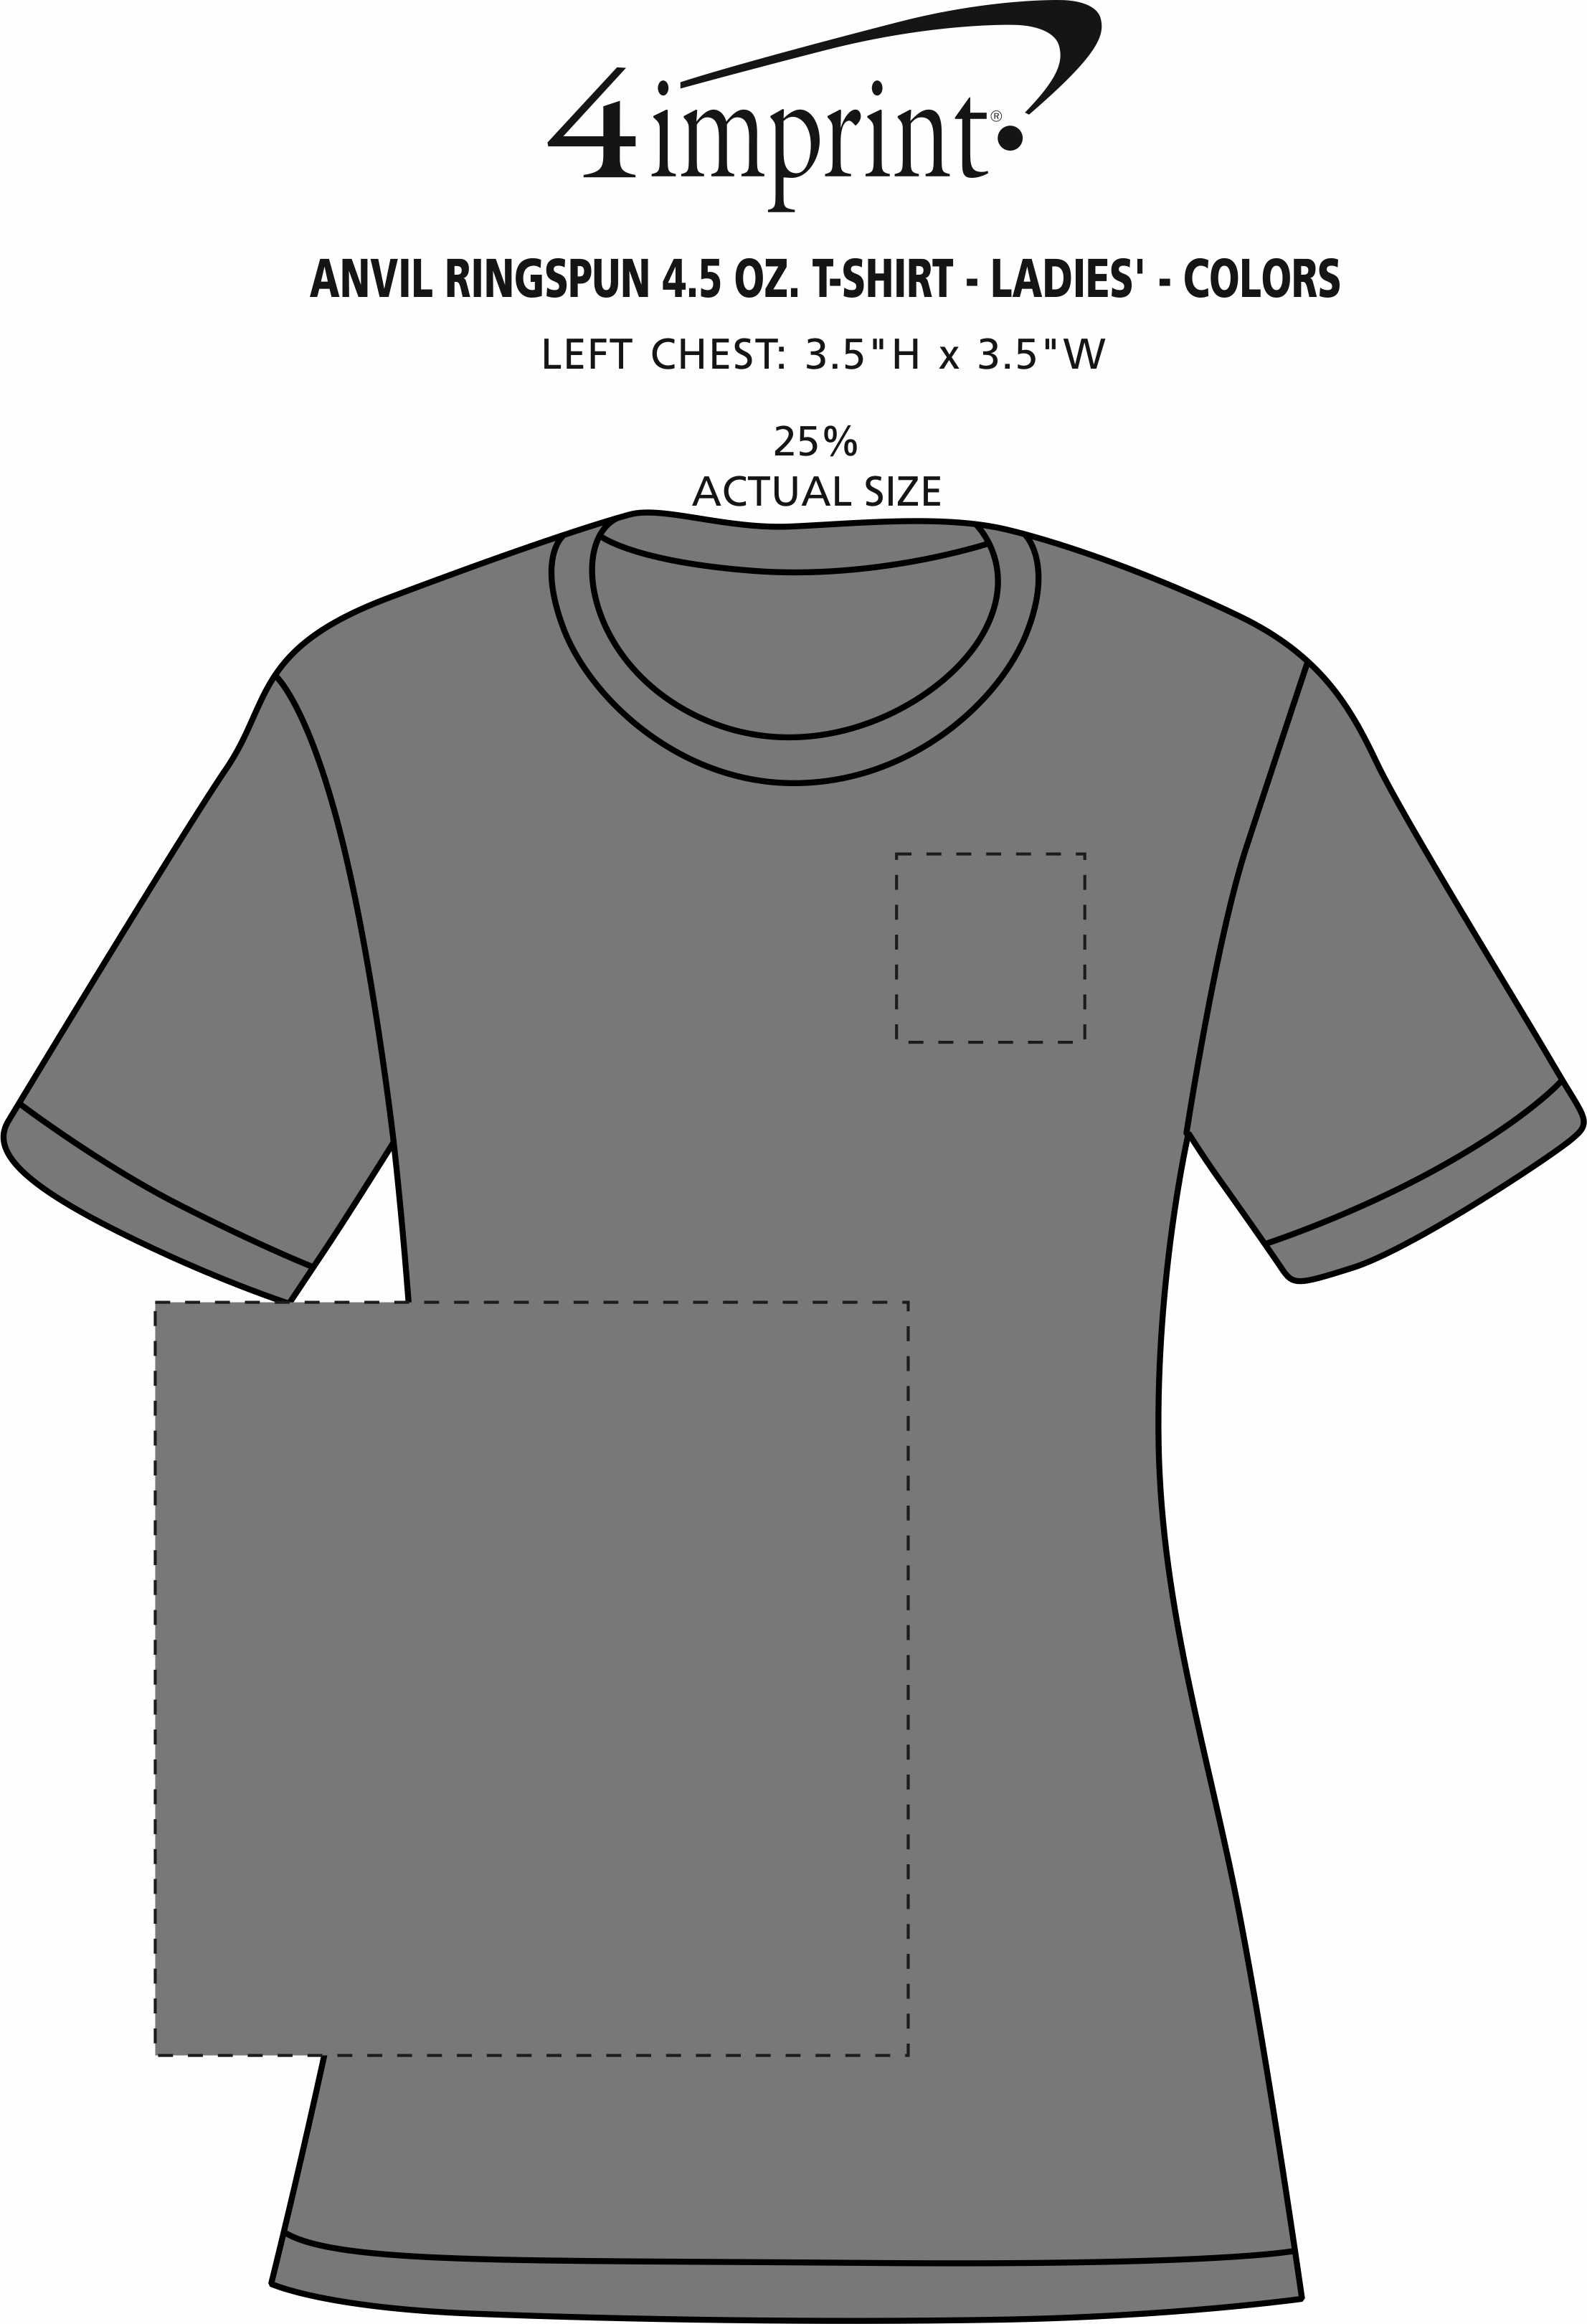 Imprint Area of Gildan Lightweight T-Shirt - Ladies' - Colors